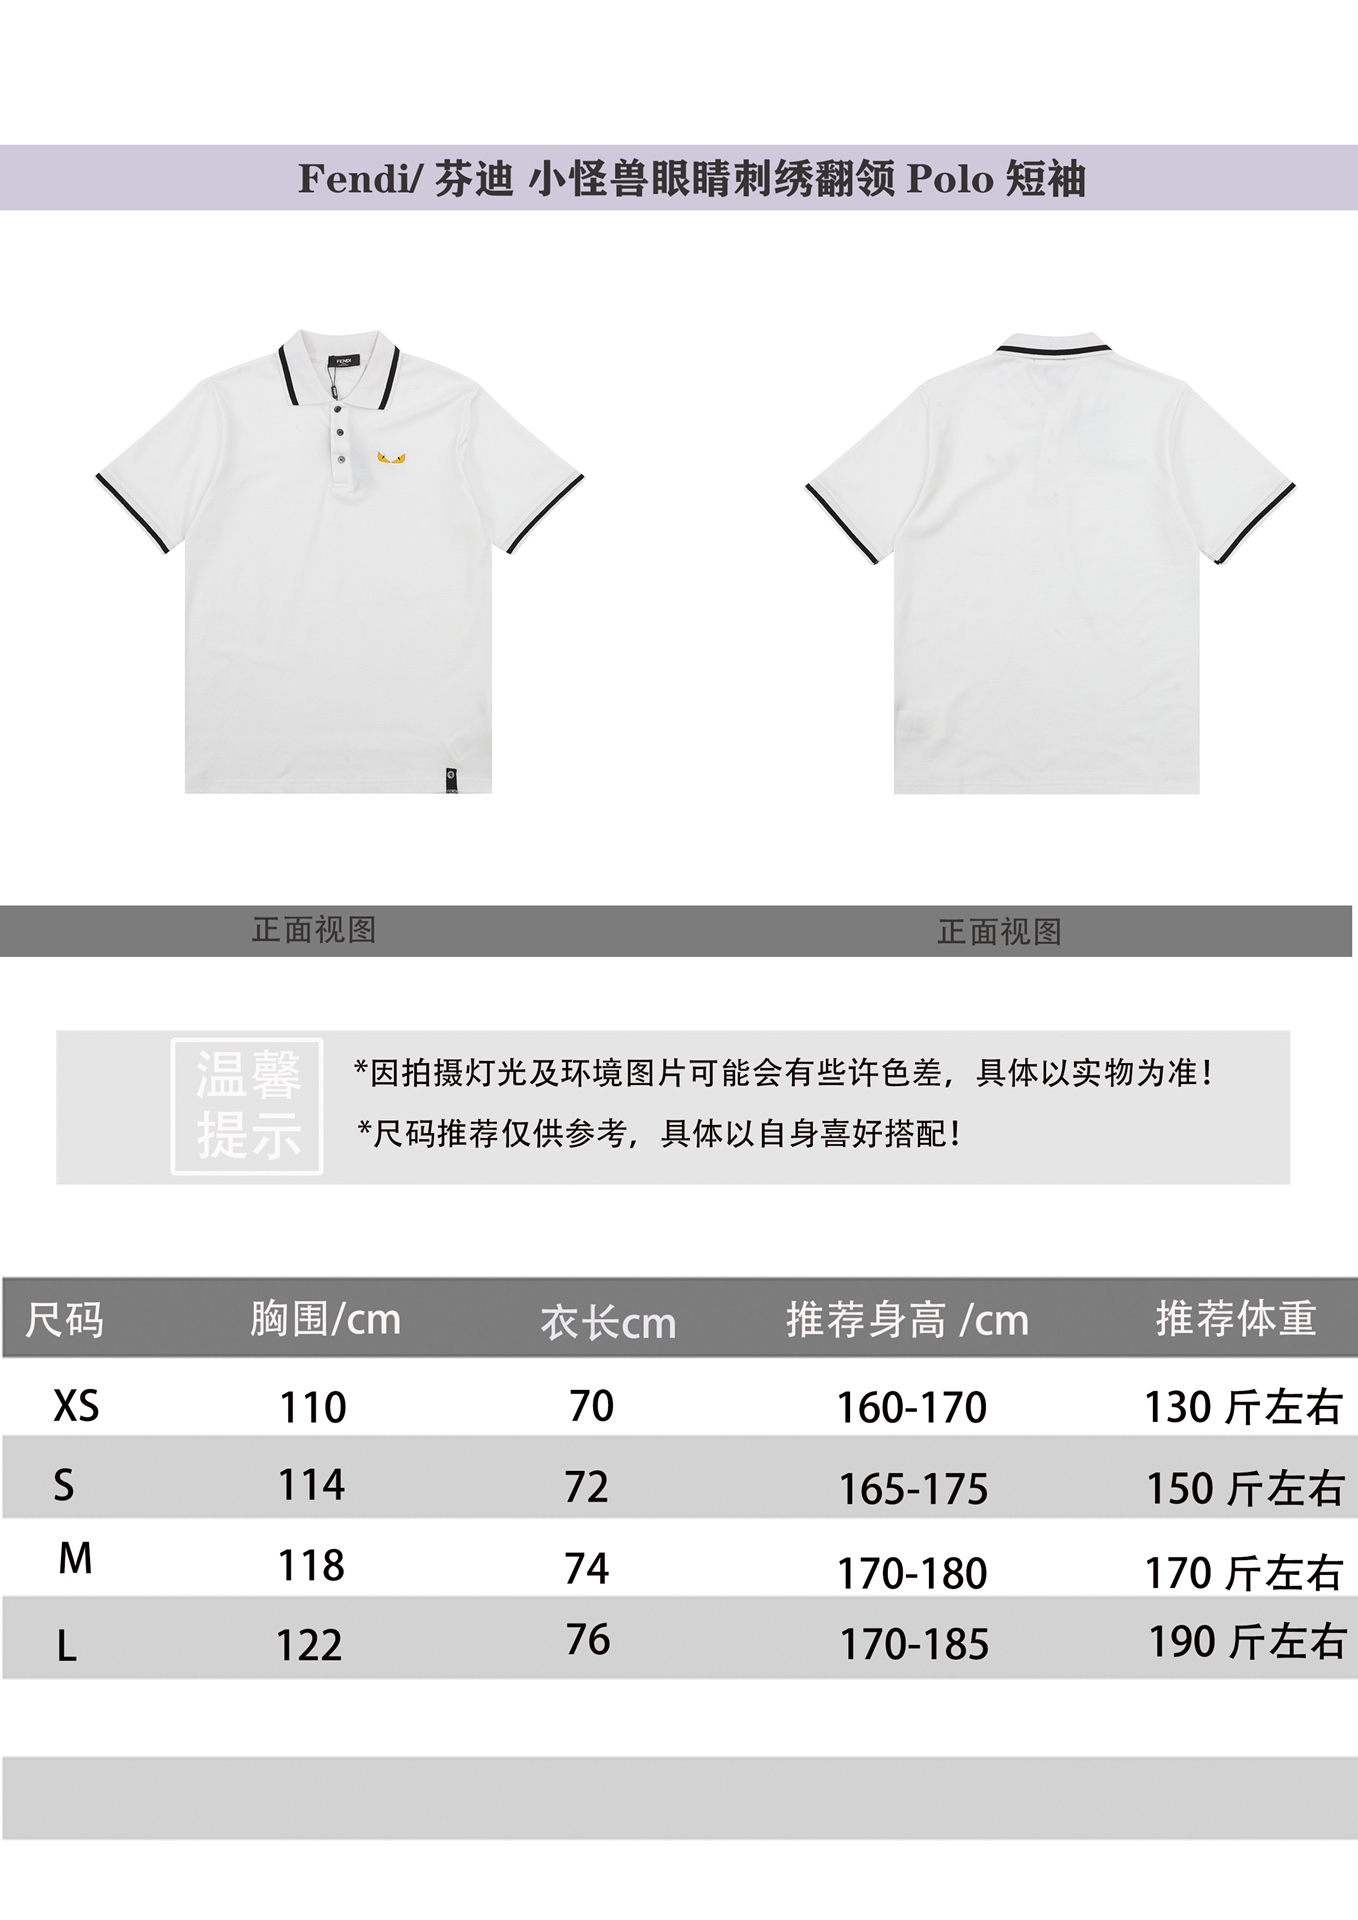 Cheap Replica
 Fendi Good
 Clothing Polo T-Shirt Embroidery Short Sleeve